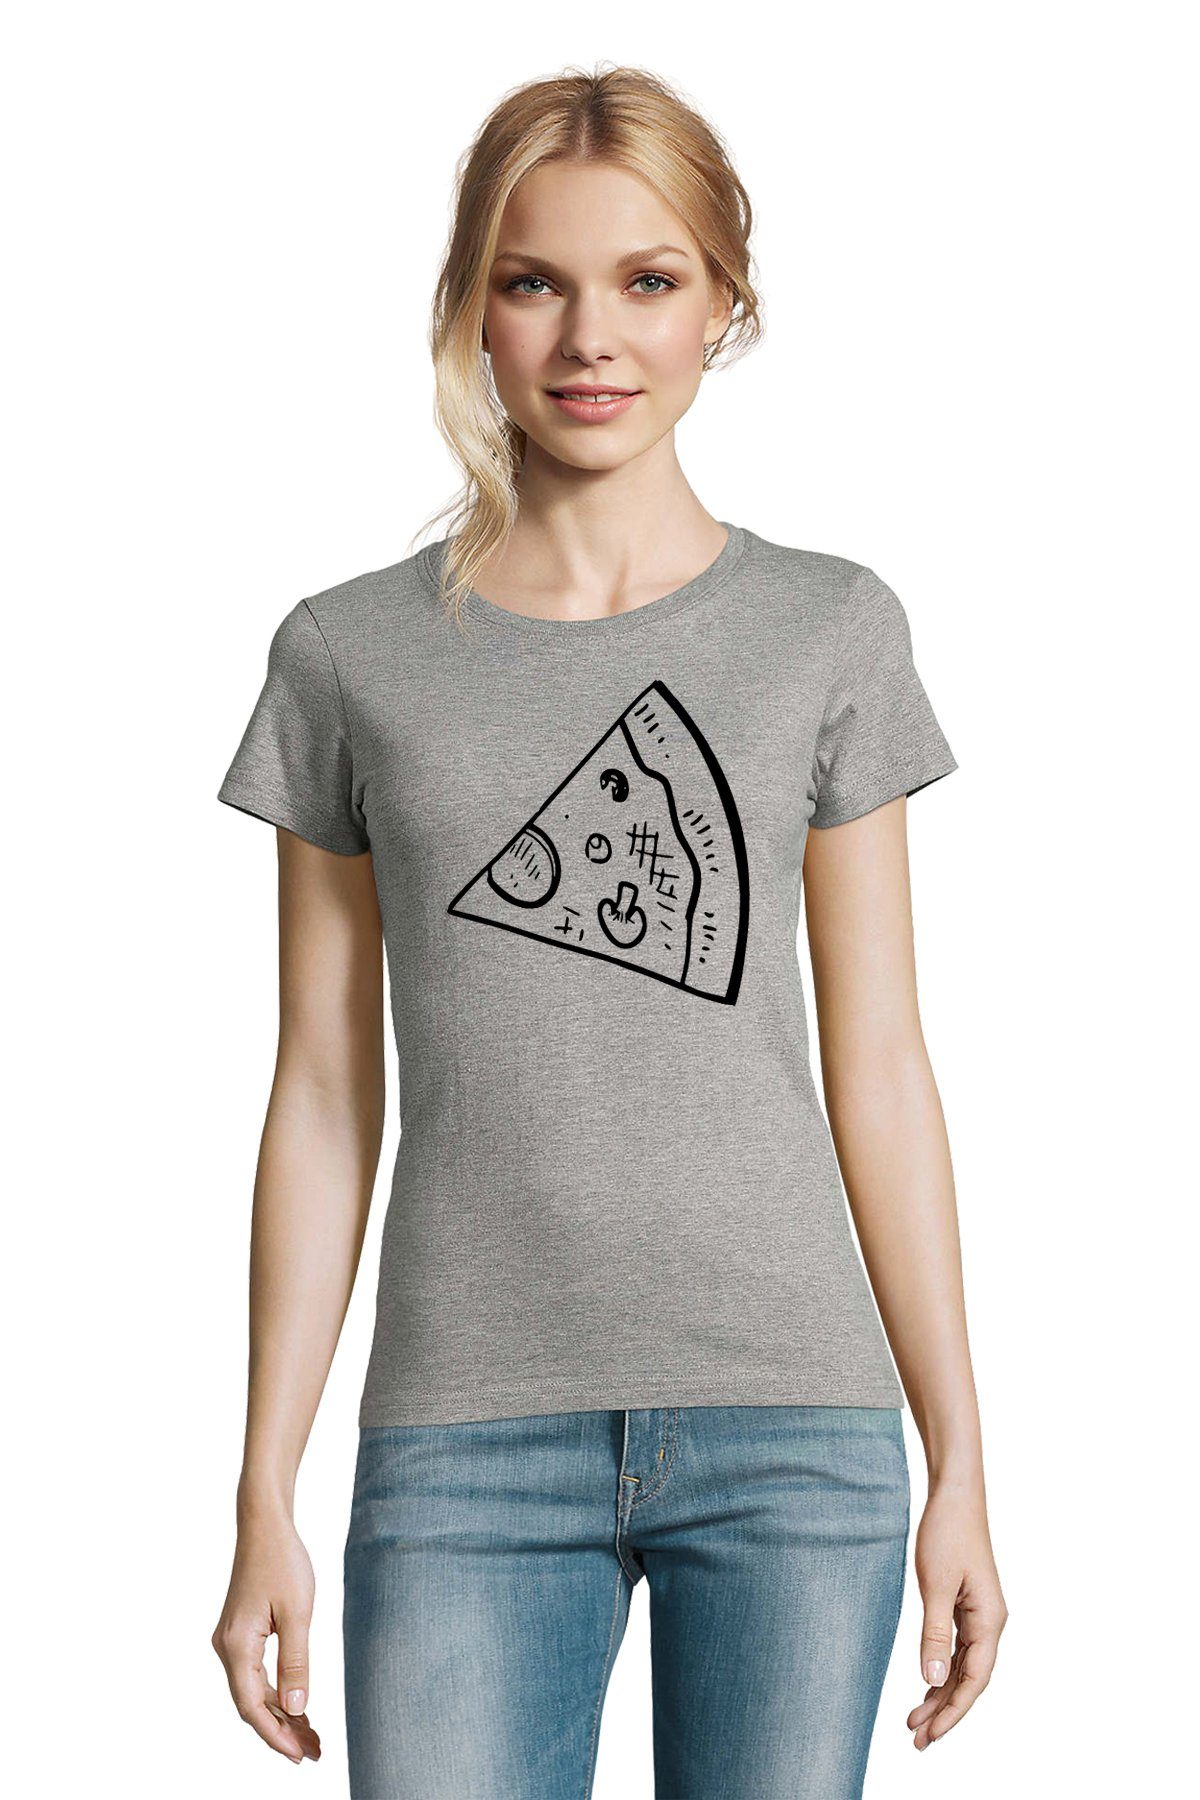 T-Shirt Brownie BFF Stück Friends Pizza Pärchen Shirt Valentin Grau Blondie Damen & Partner